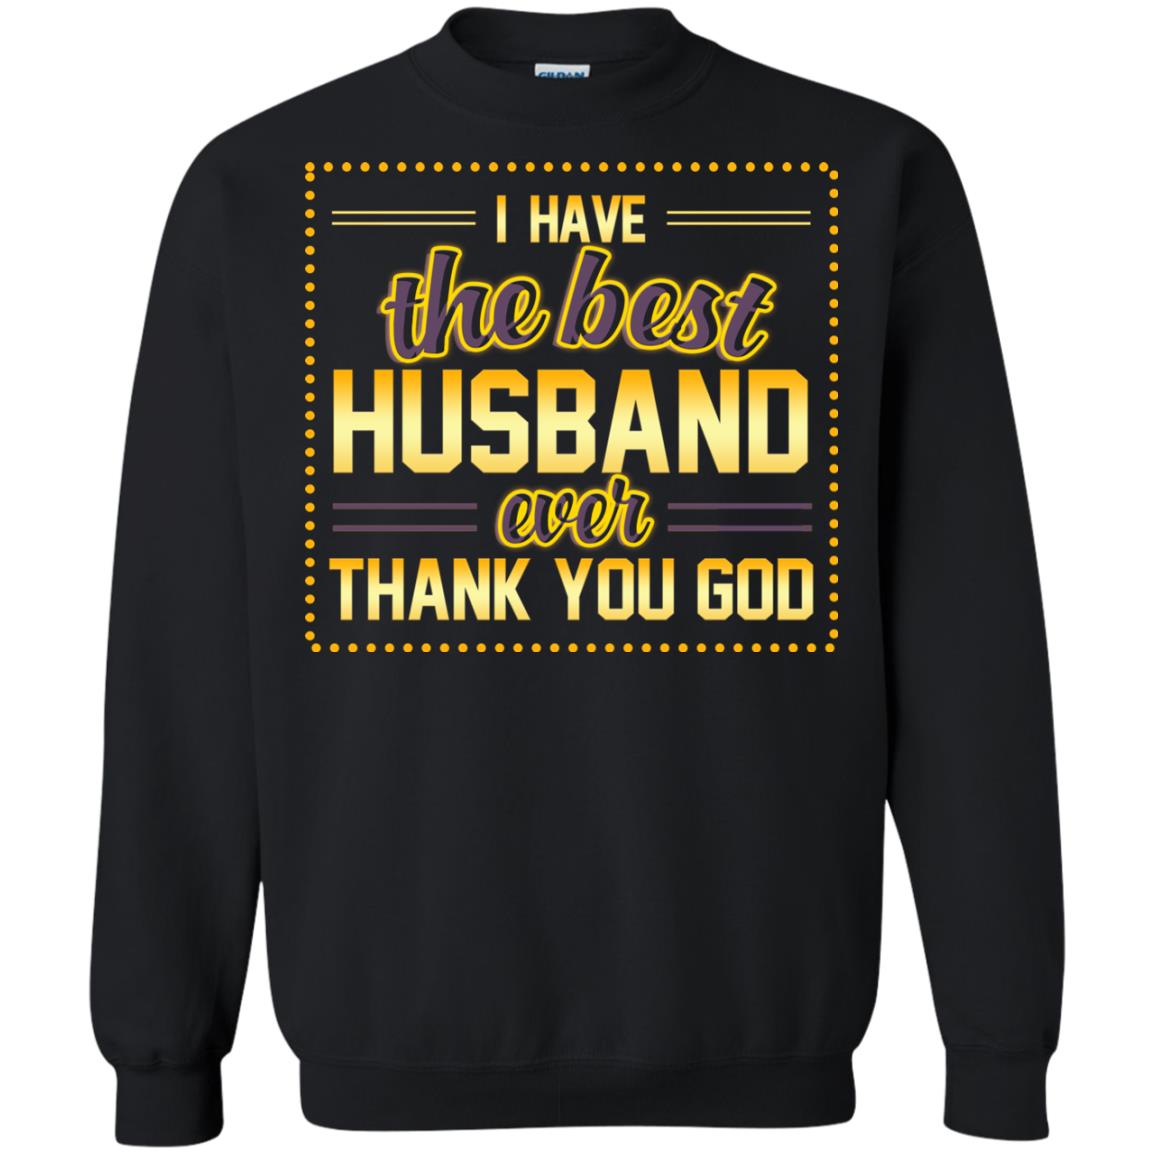 I Have The Best Husband Ever Thank You God Shirt For WifeG180 Gildan Crewneck Pullover Sweatshirt 8 oz.